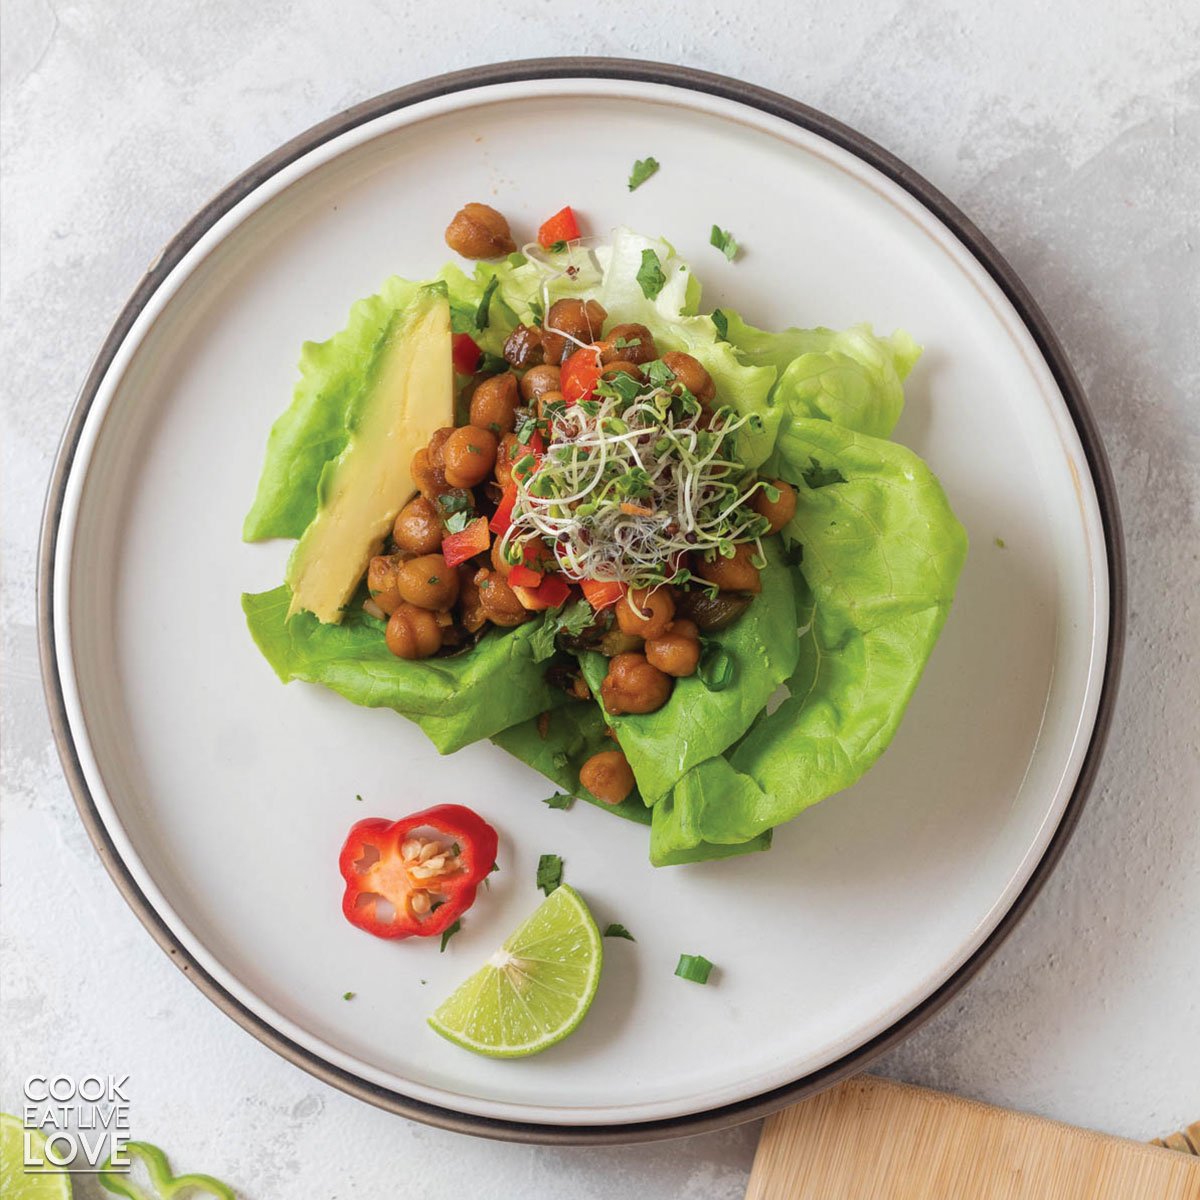 https://cookeatlivelove.com/wp-content/uploads/2020/02/vegan-lettuce-wraps-no-tofu-recipe.jpg